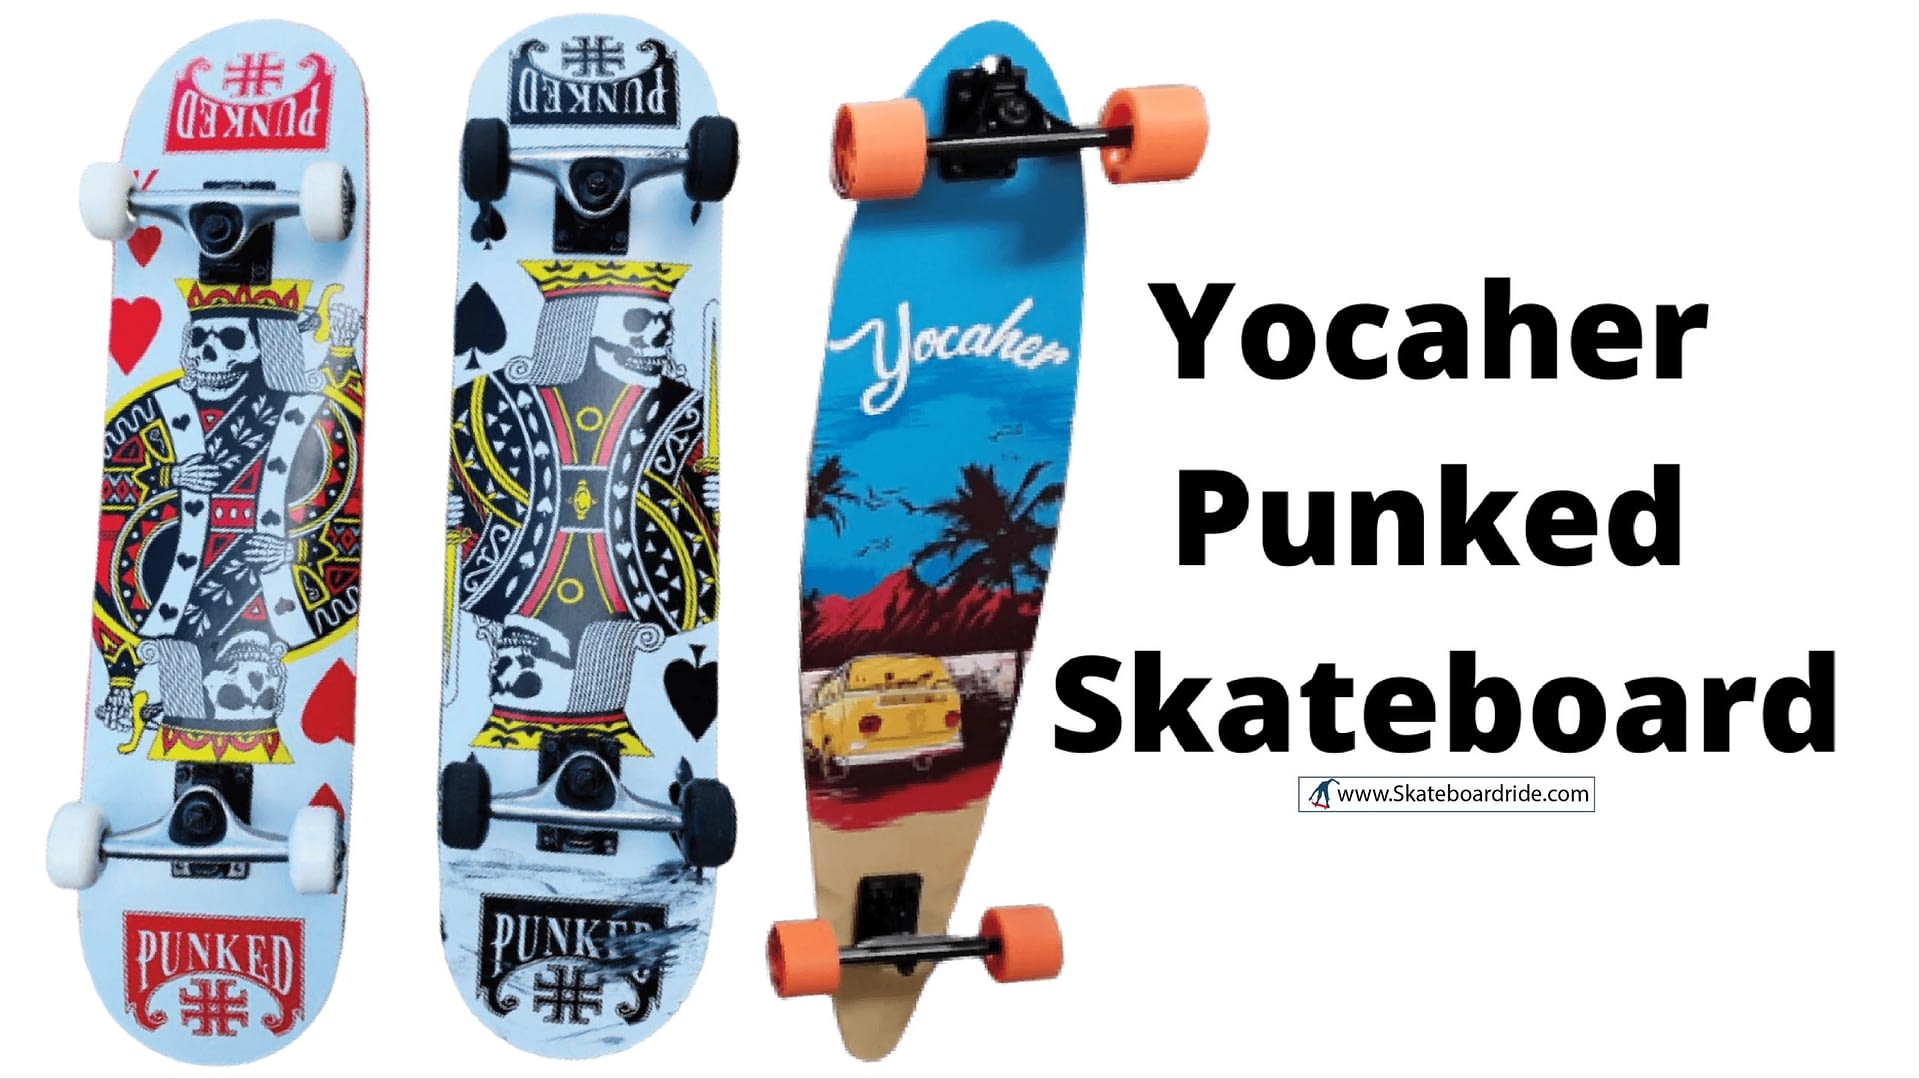 Yocaher Punked Skateboard 